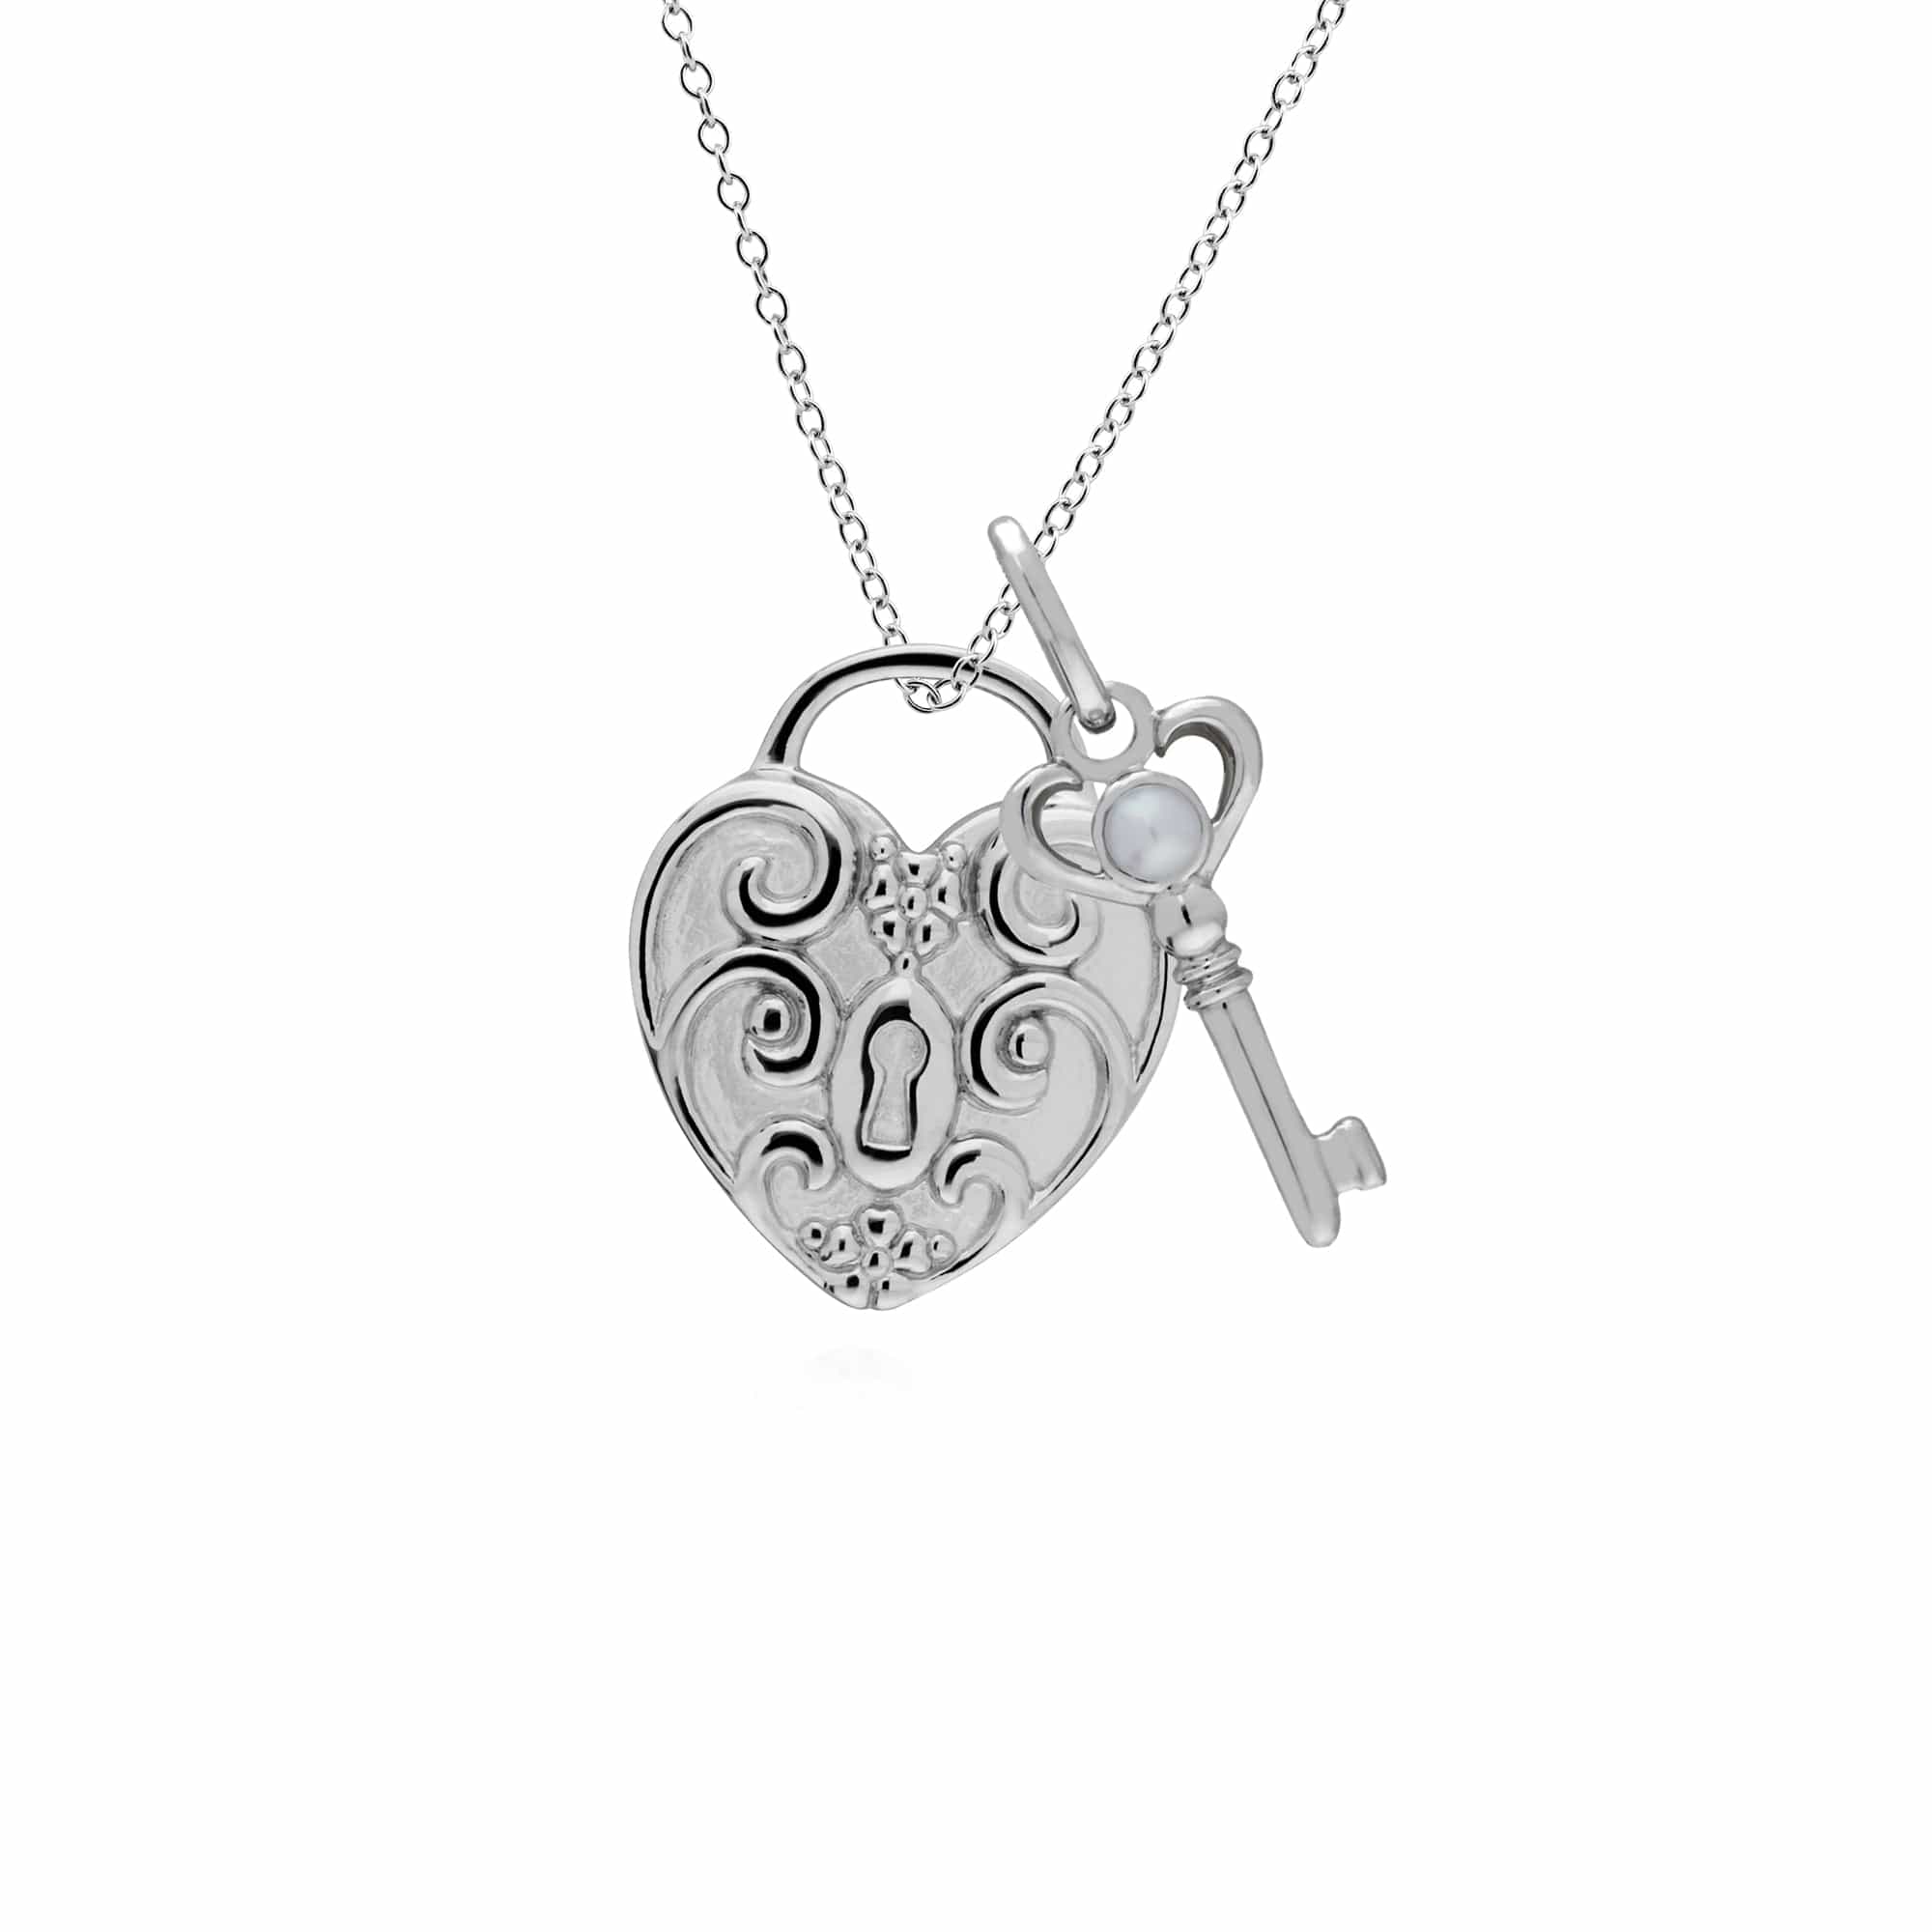 270P027201925-270P026601925 Classic Swirl Heart Lock Pendant & Pearl Key Charm in 925 Sterling Silver 1